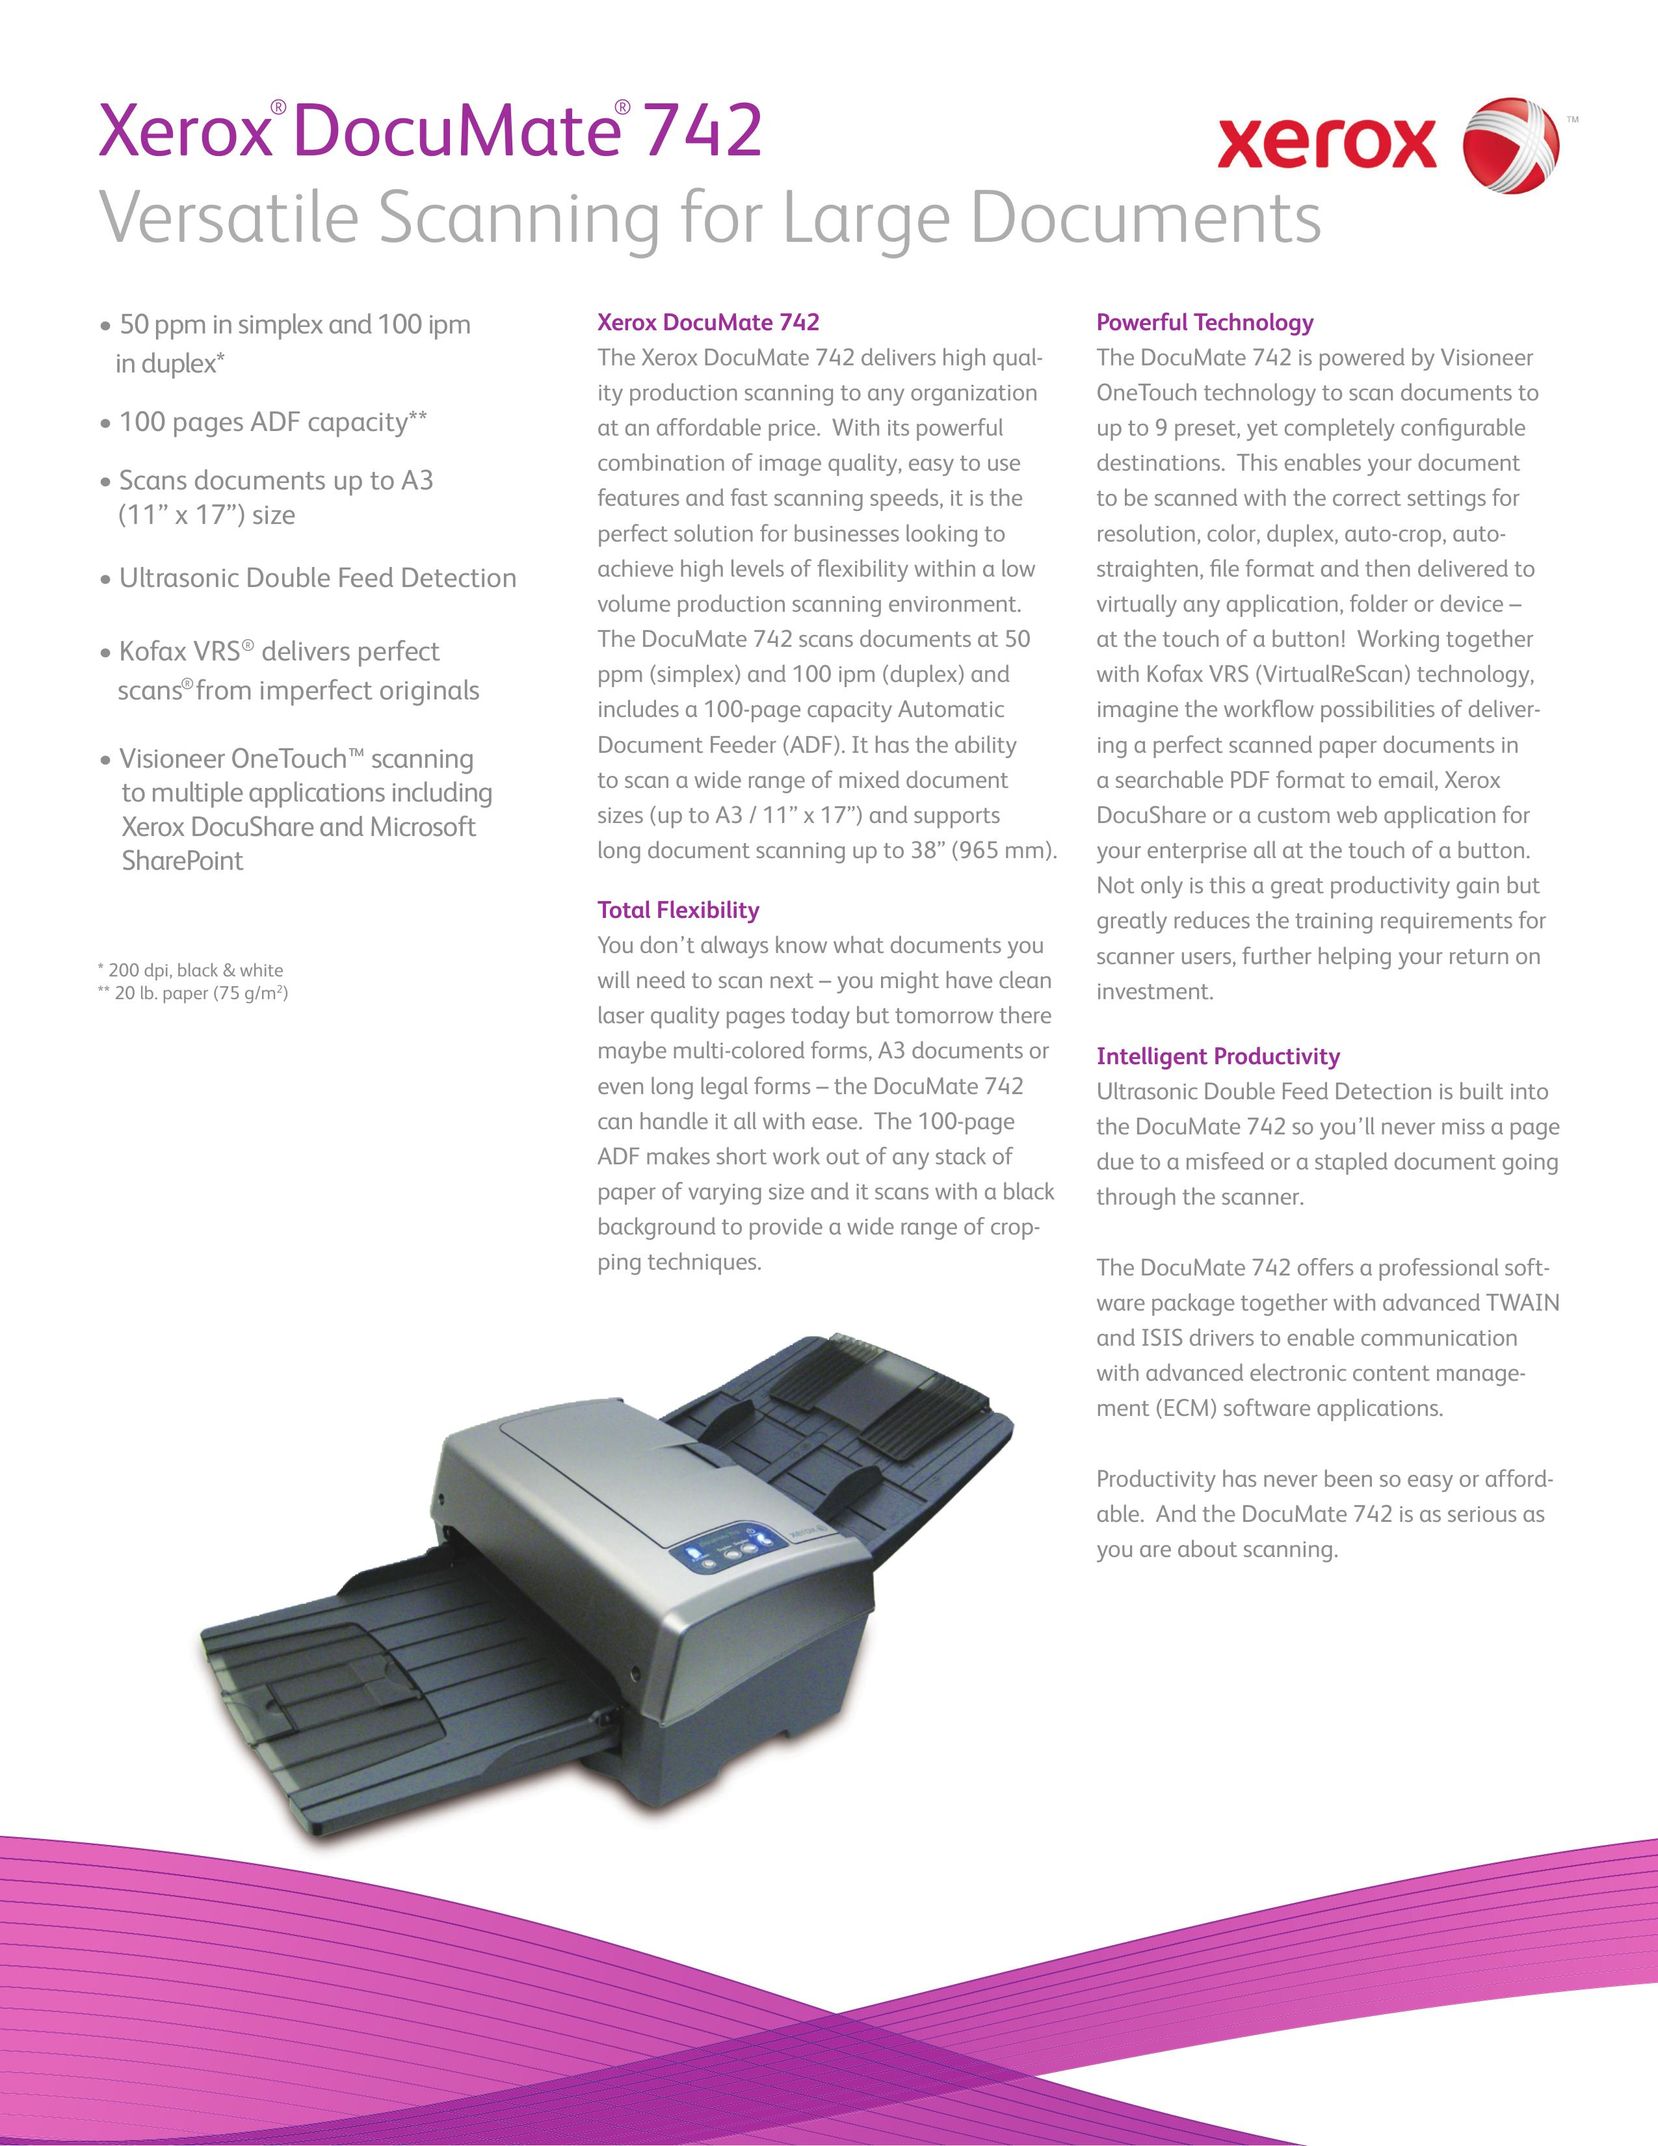 Xerox XDM7425DWU Scanner User Manual